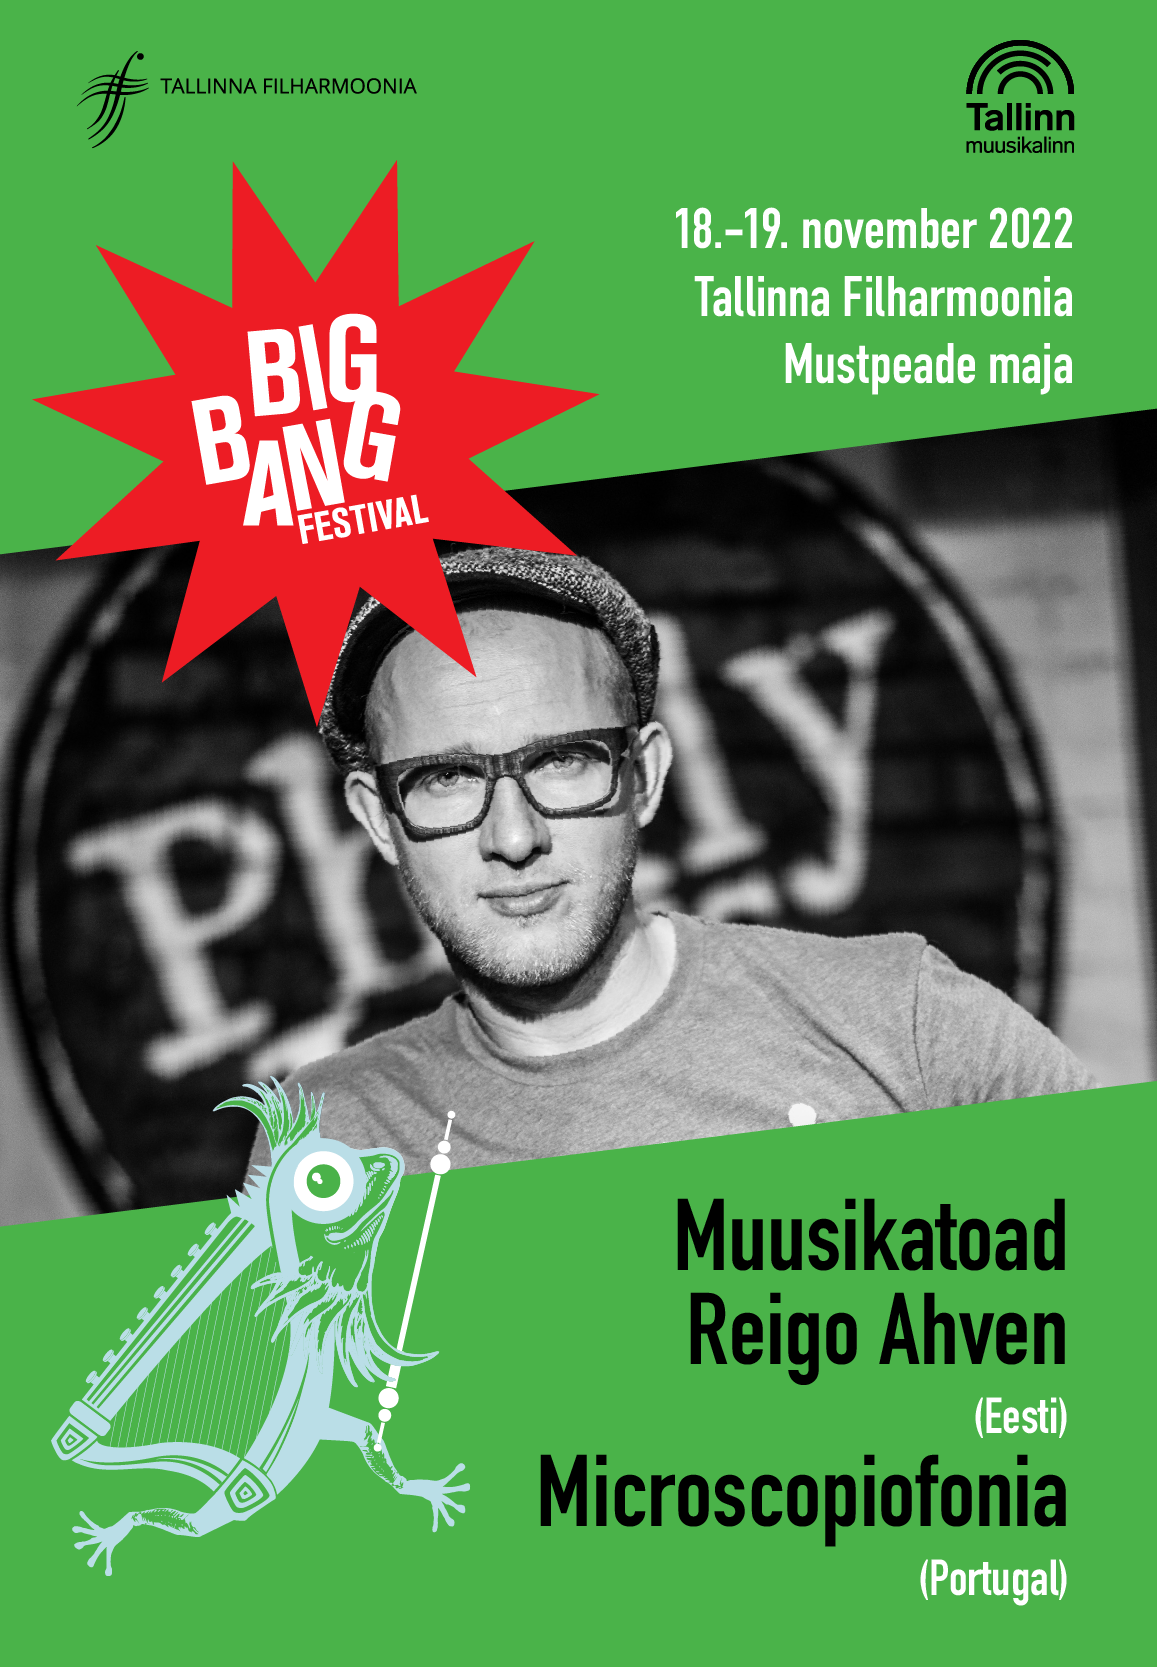 BIG BANG. MUUSIKATOAD: Reigo Ahven (Eesti) ja Microscopiofonia (Portugal)